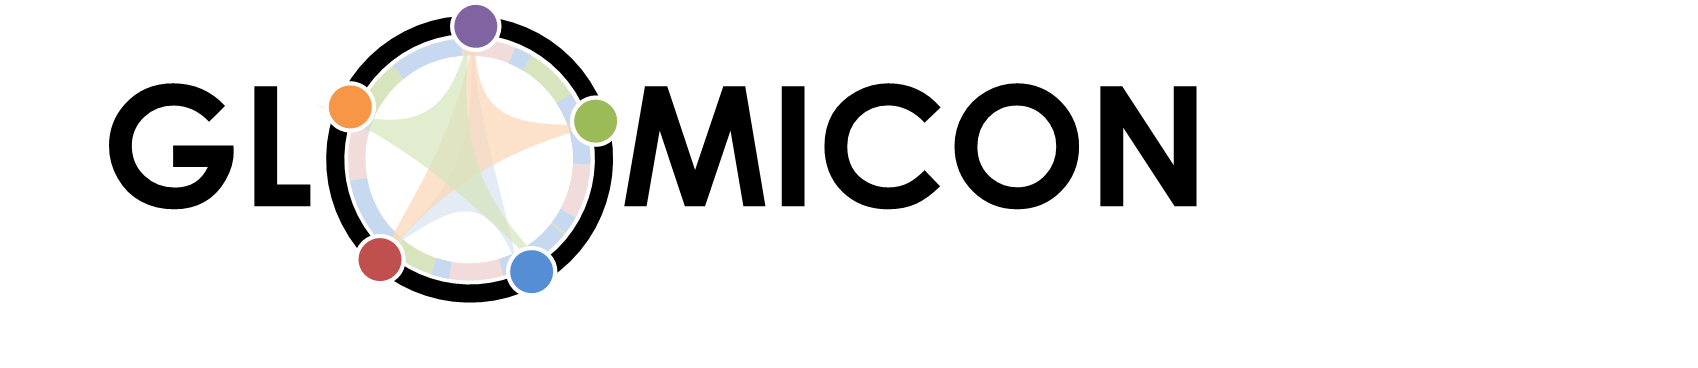 glomicon_logo